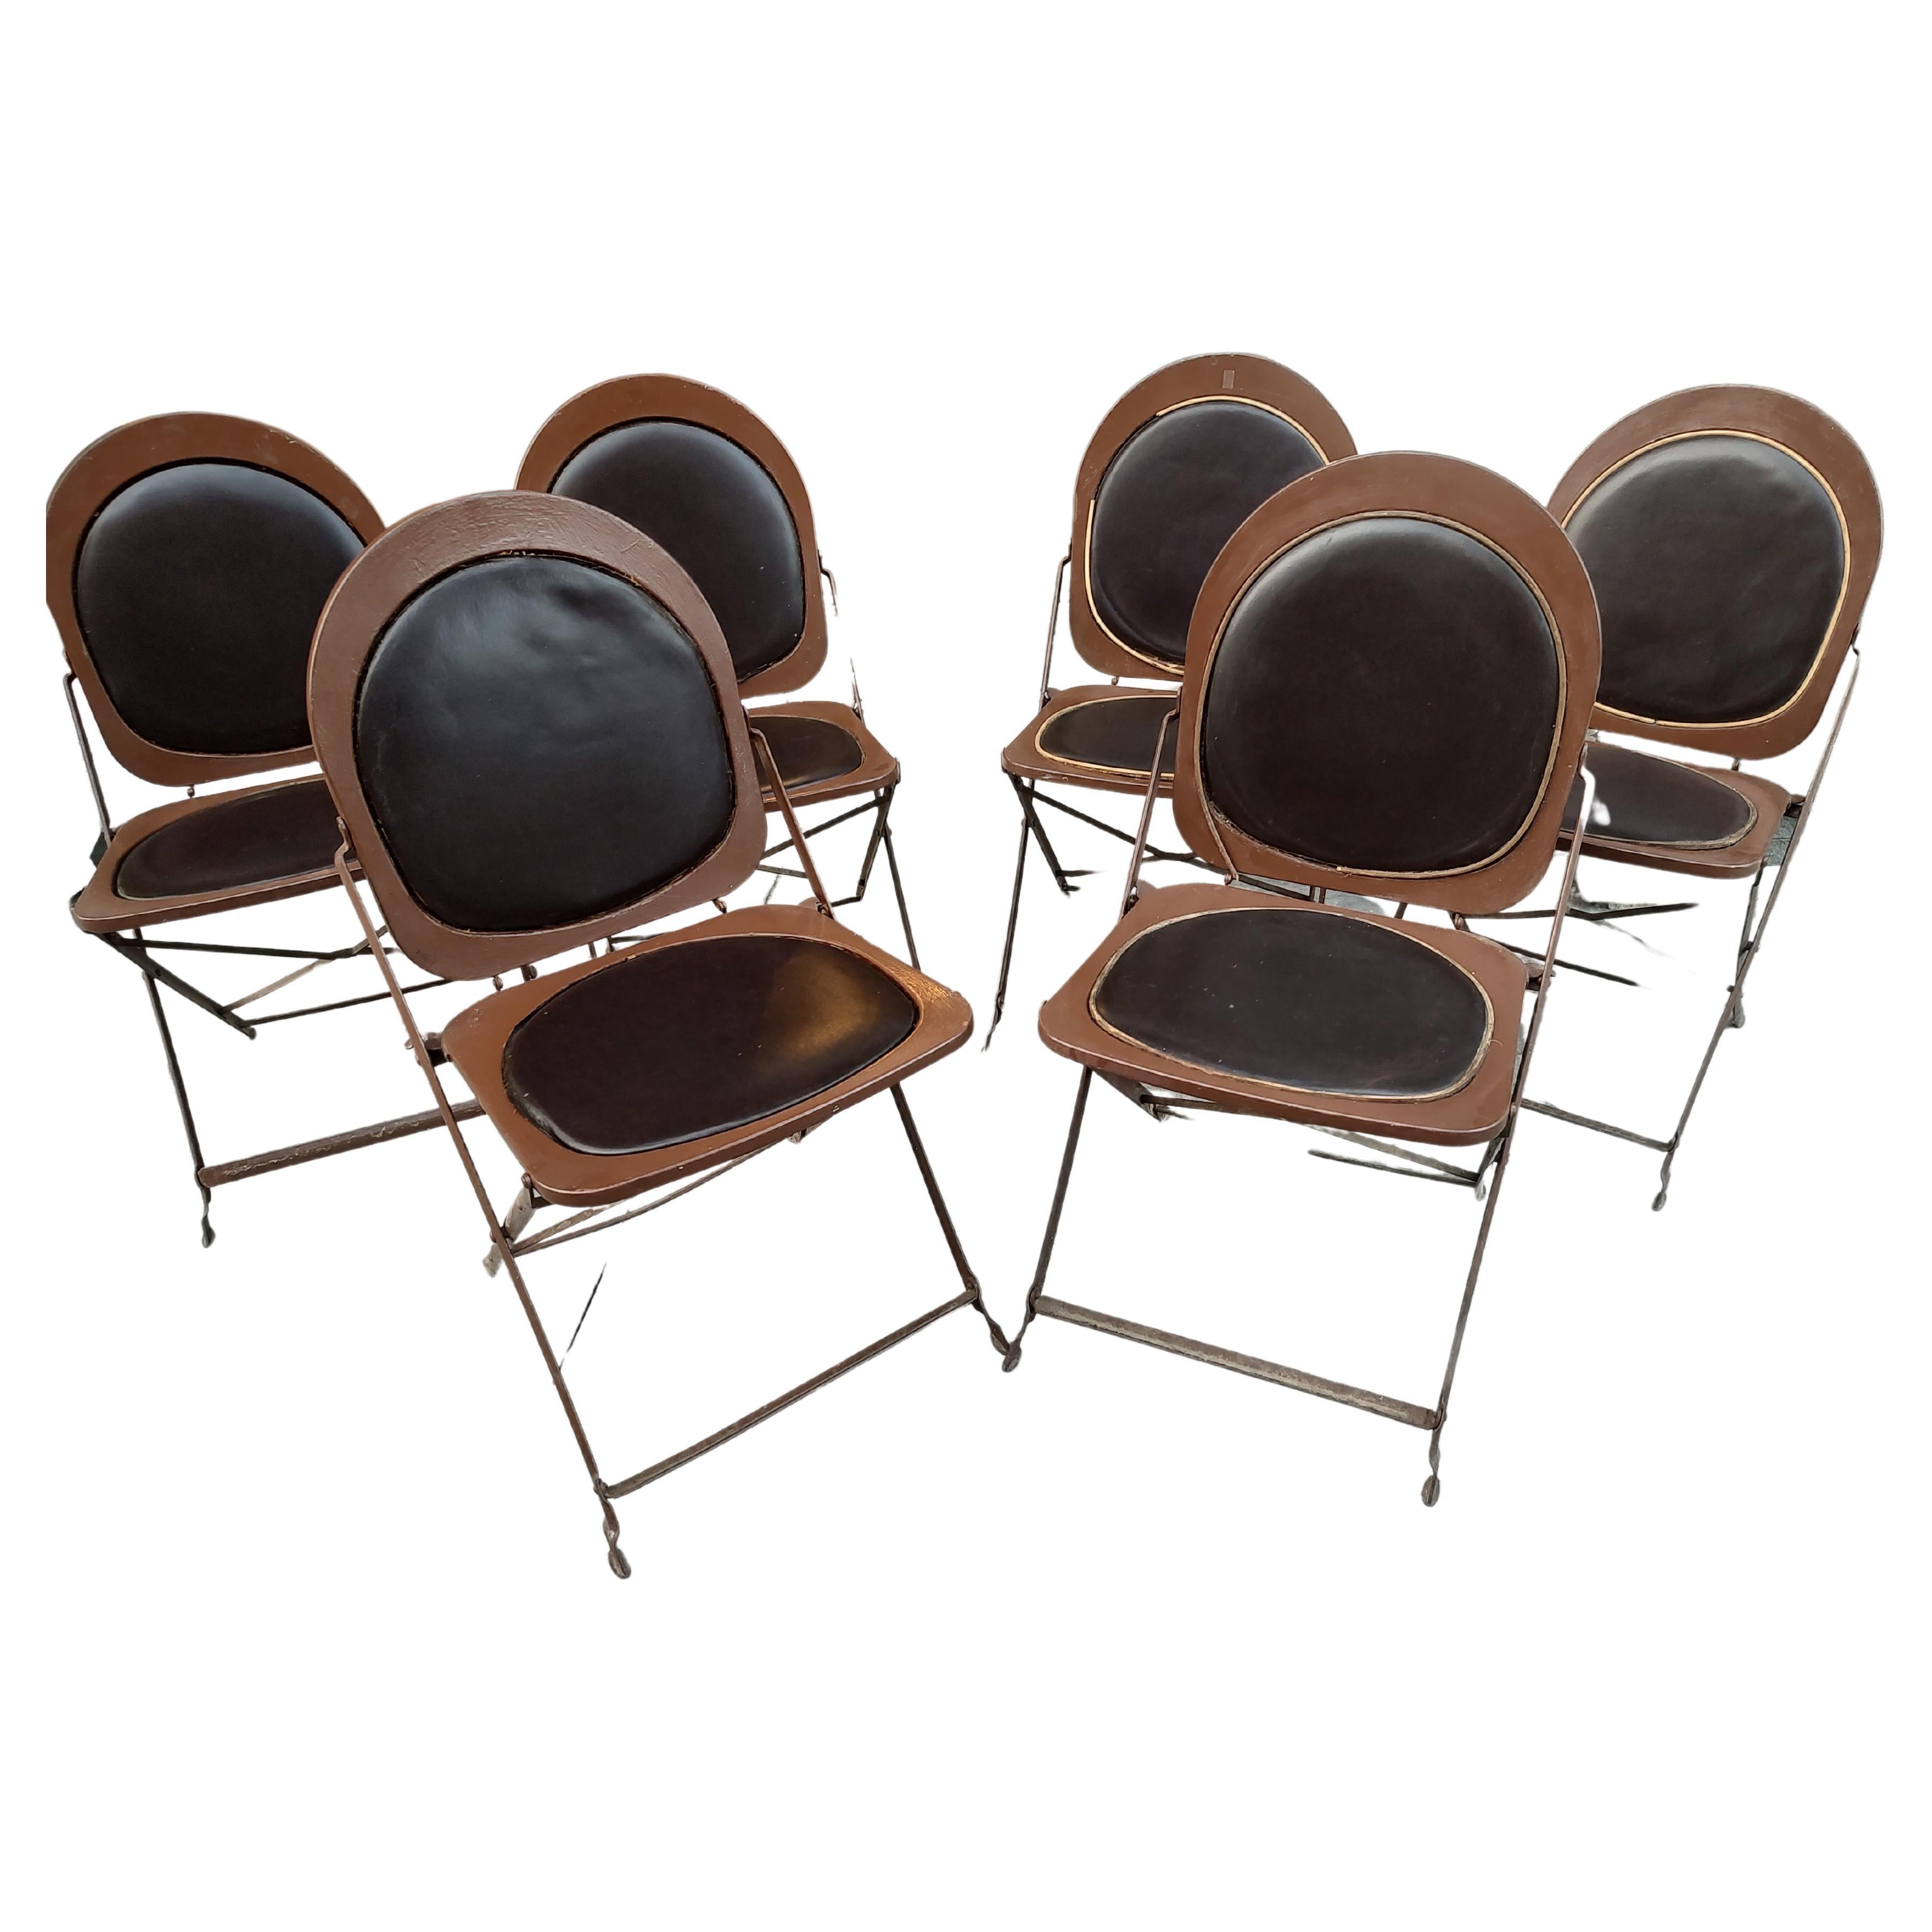 Set of 6 Mid-Century Modern Sculptural Folding Chairs